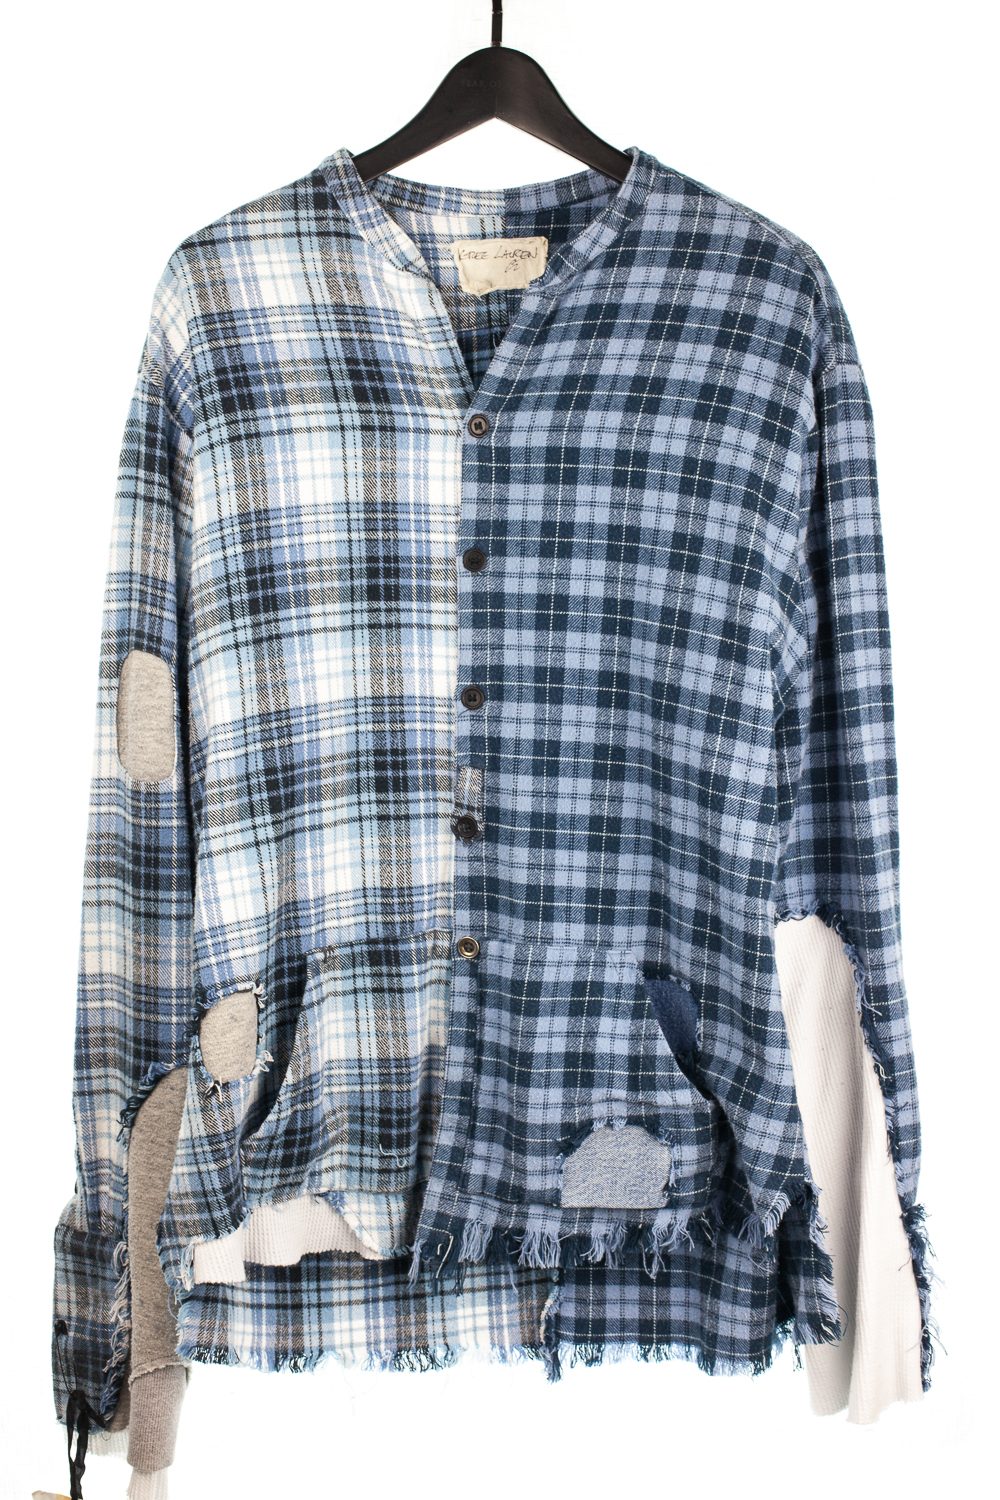 NWT 50/50 Flannel Studio Shirt w/ Pouch Pocket